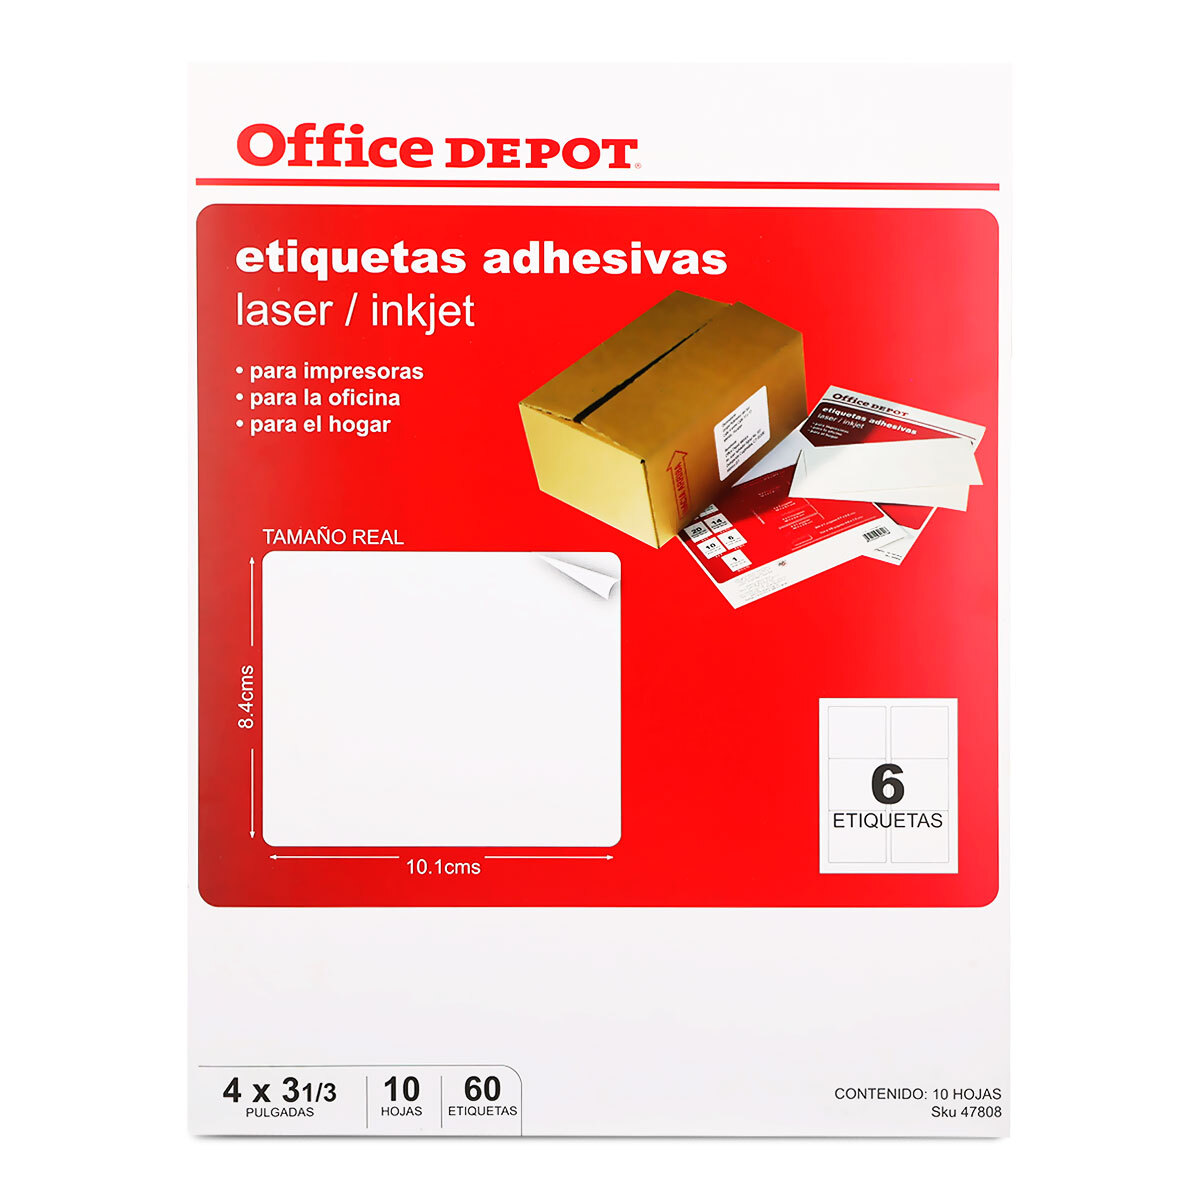 Etiquetas Adhesivas para Impresión Office Depot / 8.4 x 10.1 cm / Blanco / 60 etiquetas